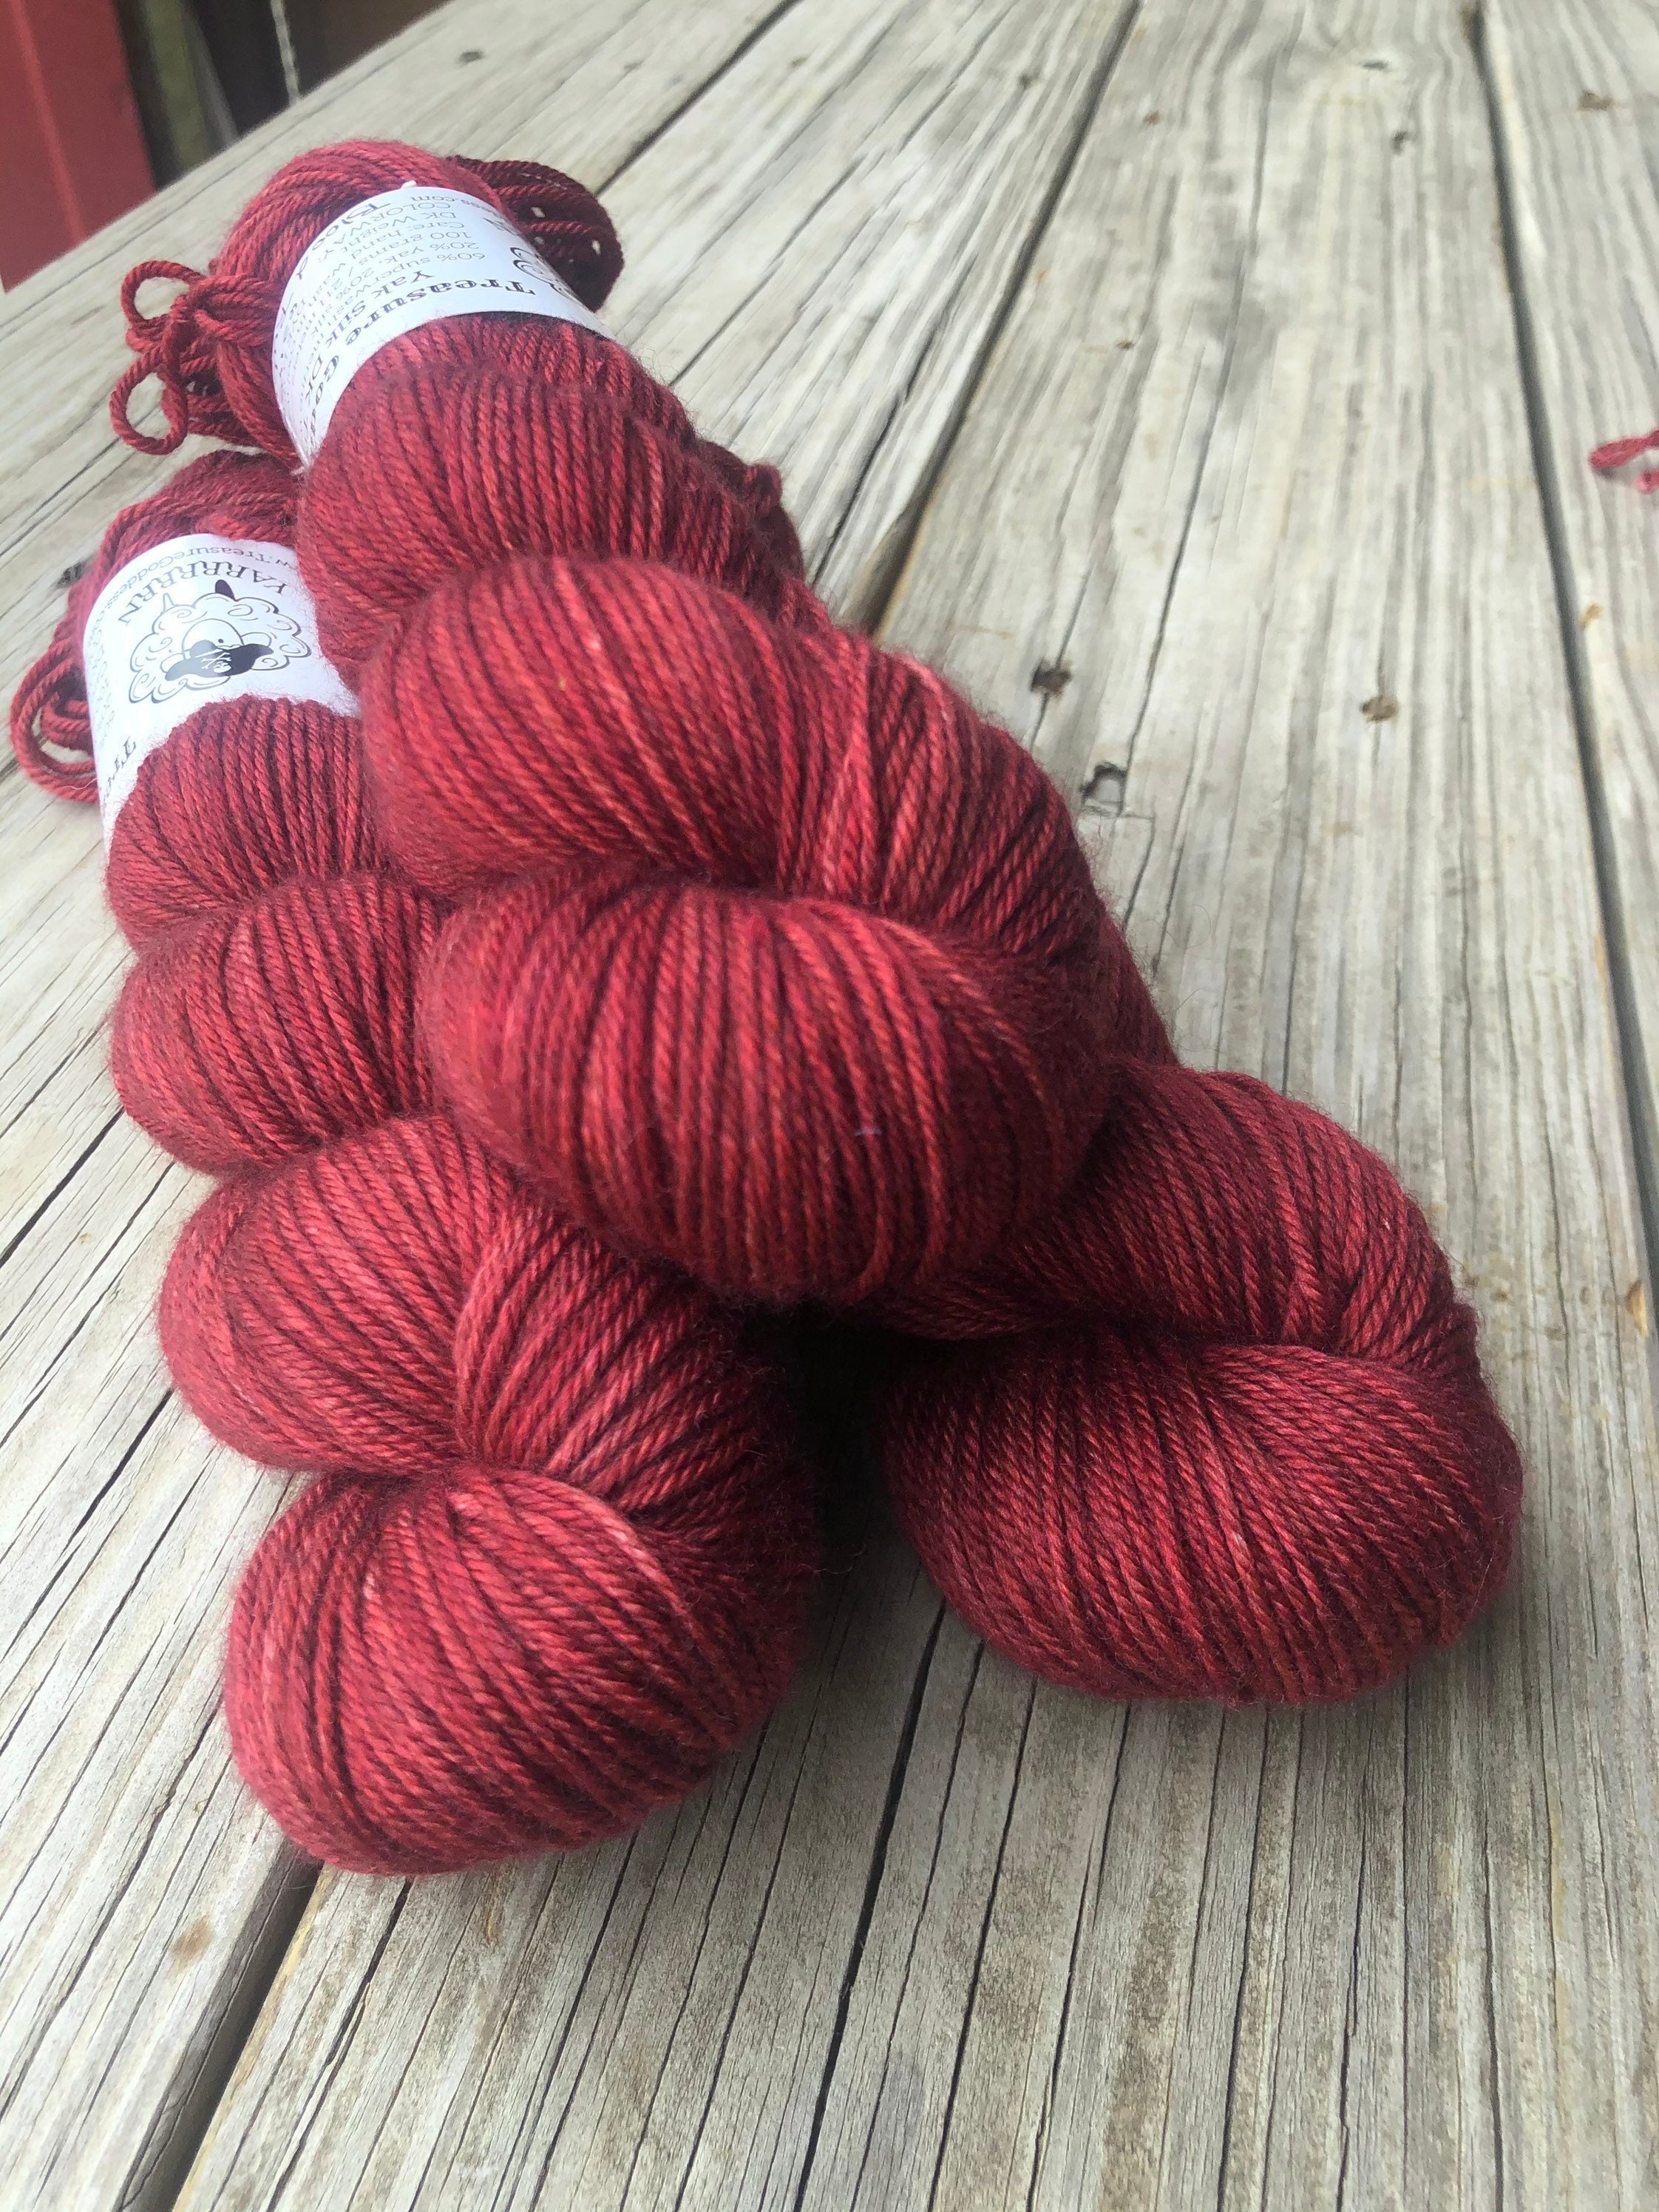 Silk Wool Blend Yarn Singles - Merino Silk Yarn, Sport/dk Weight,  Variegated Yarn, Tonal Yarn, Hand-Dyed, Fair Trade - 100 Grams (Yukon)